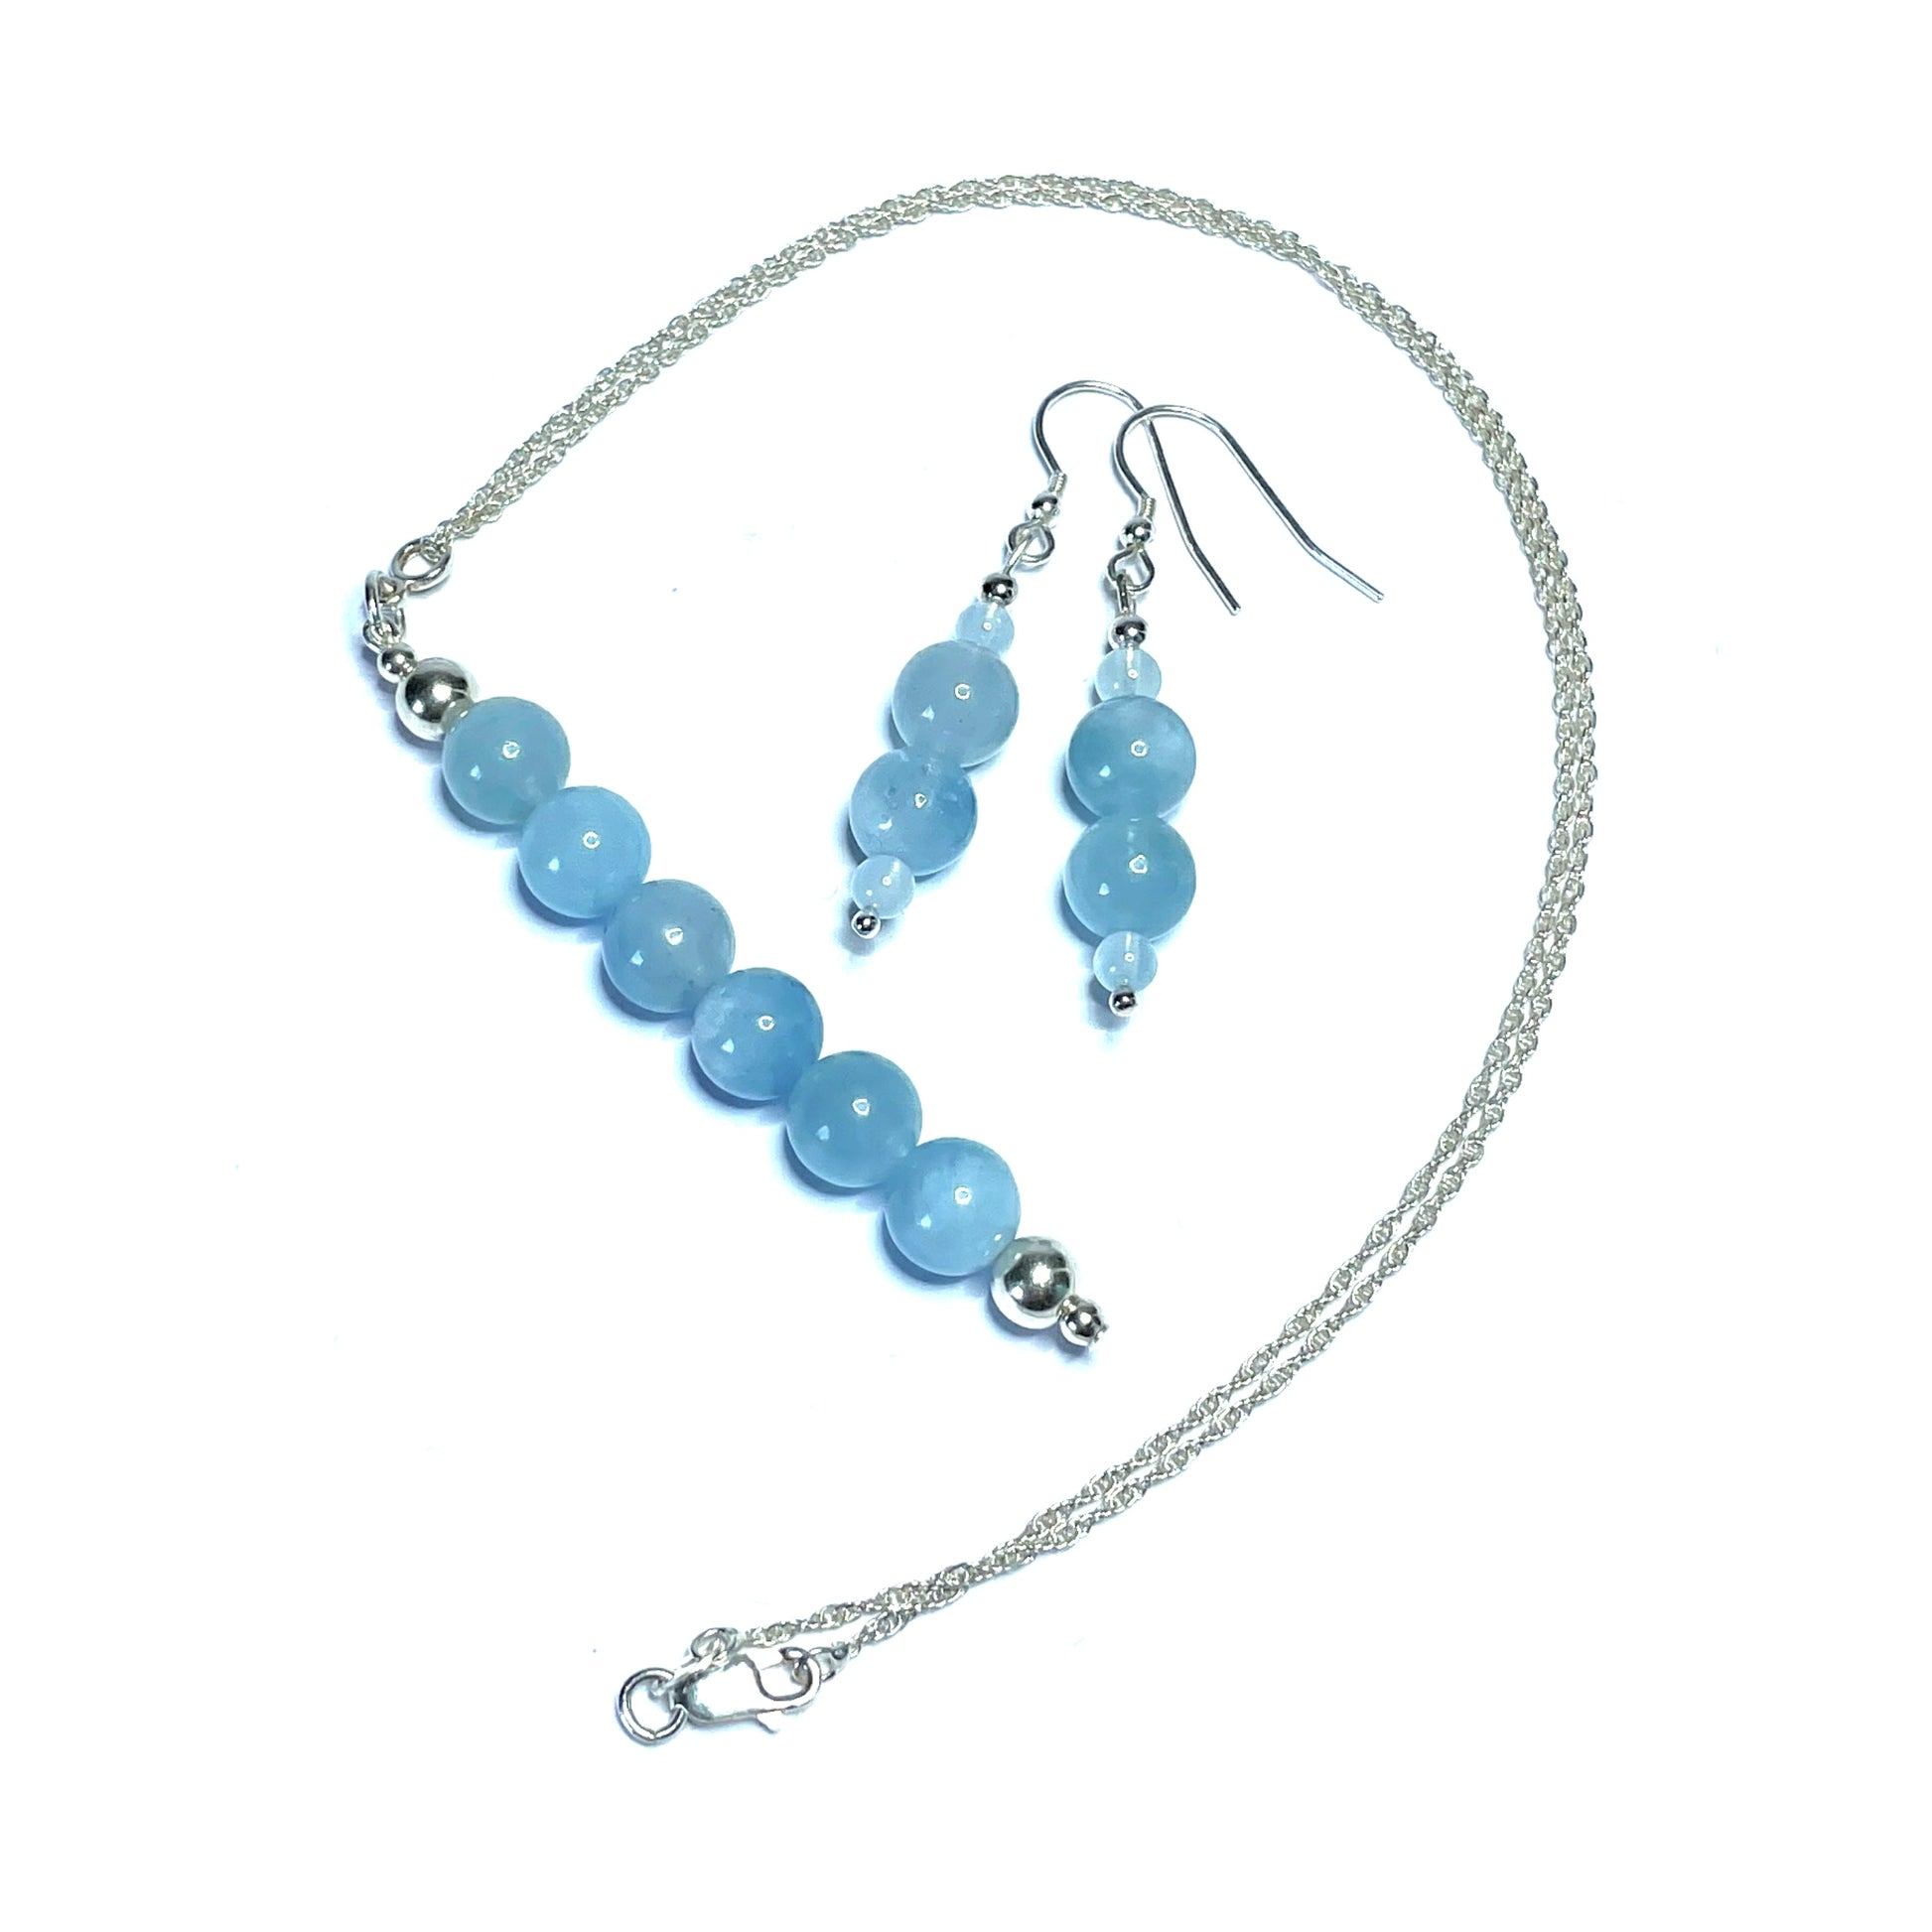 Aquamarine Pendant and Earrings Set